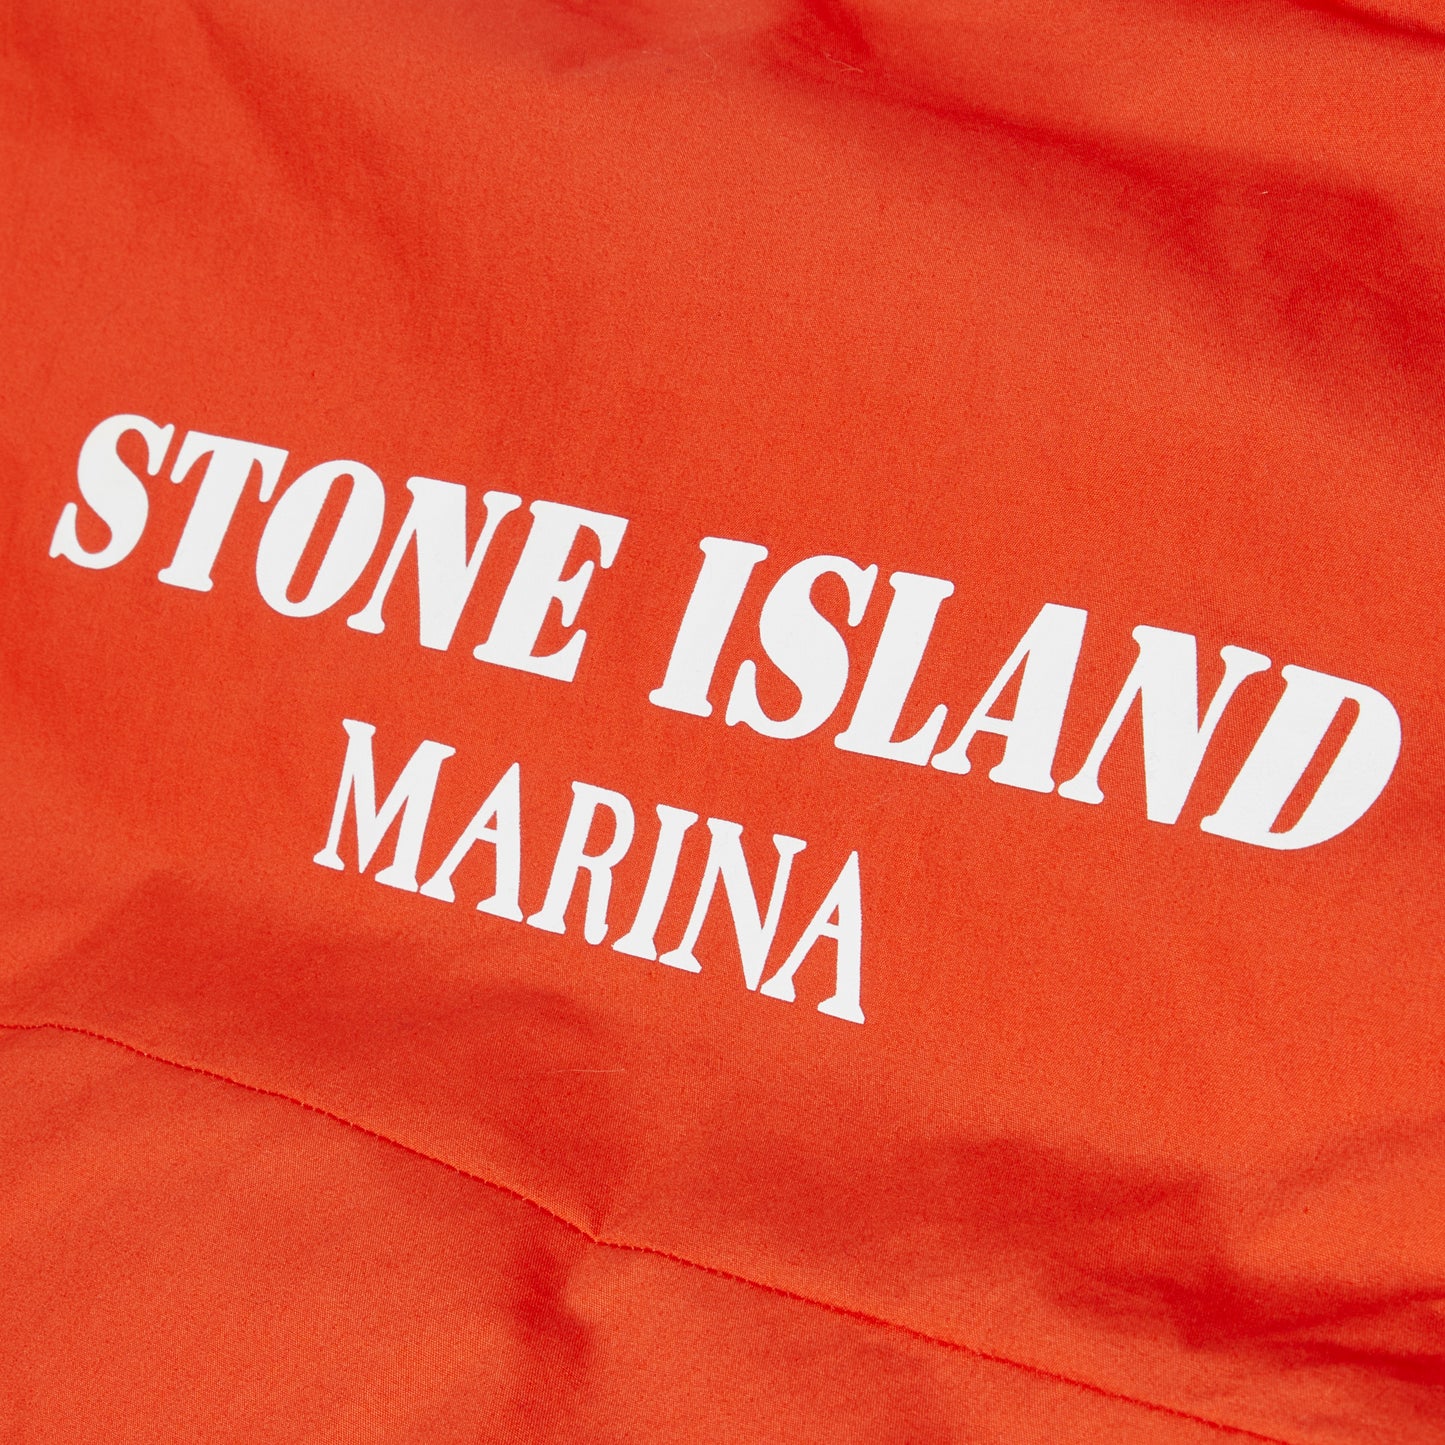 Stone Island Marina Reflective Puffer Jacket (Red)